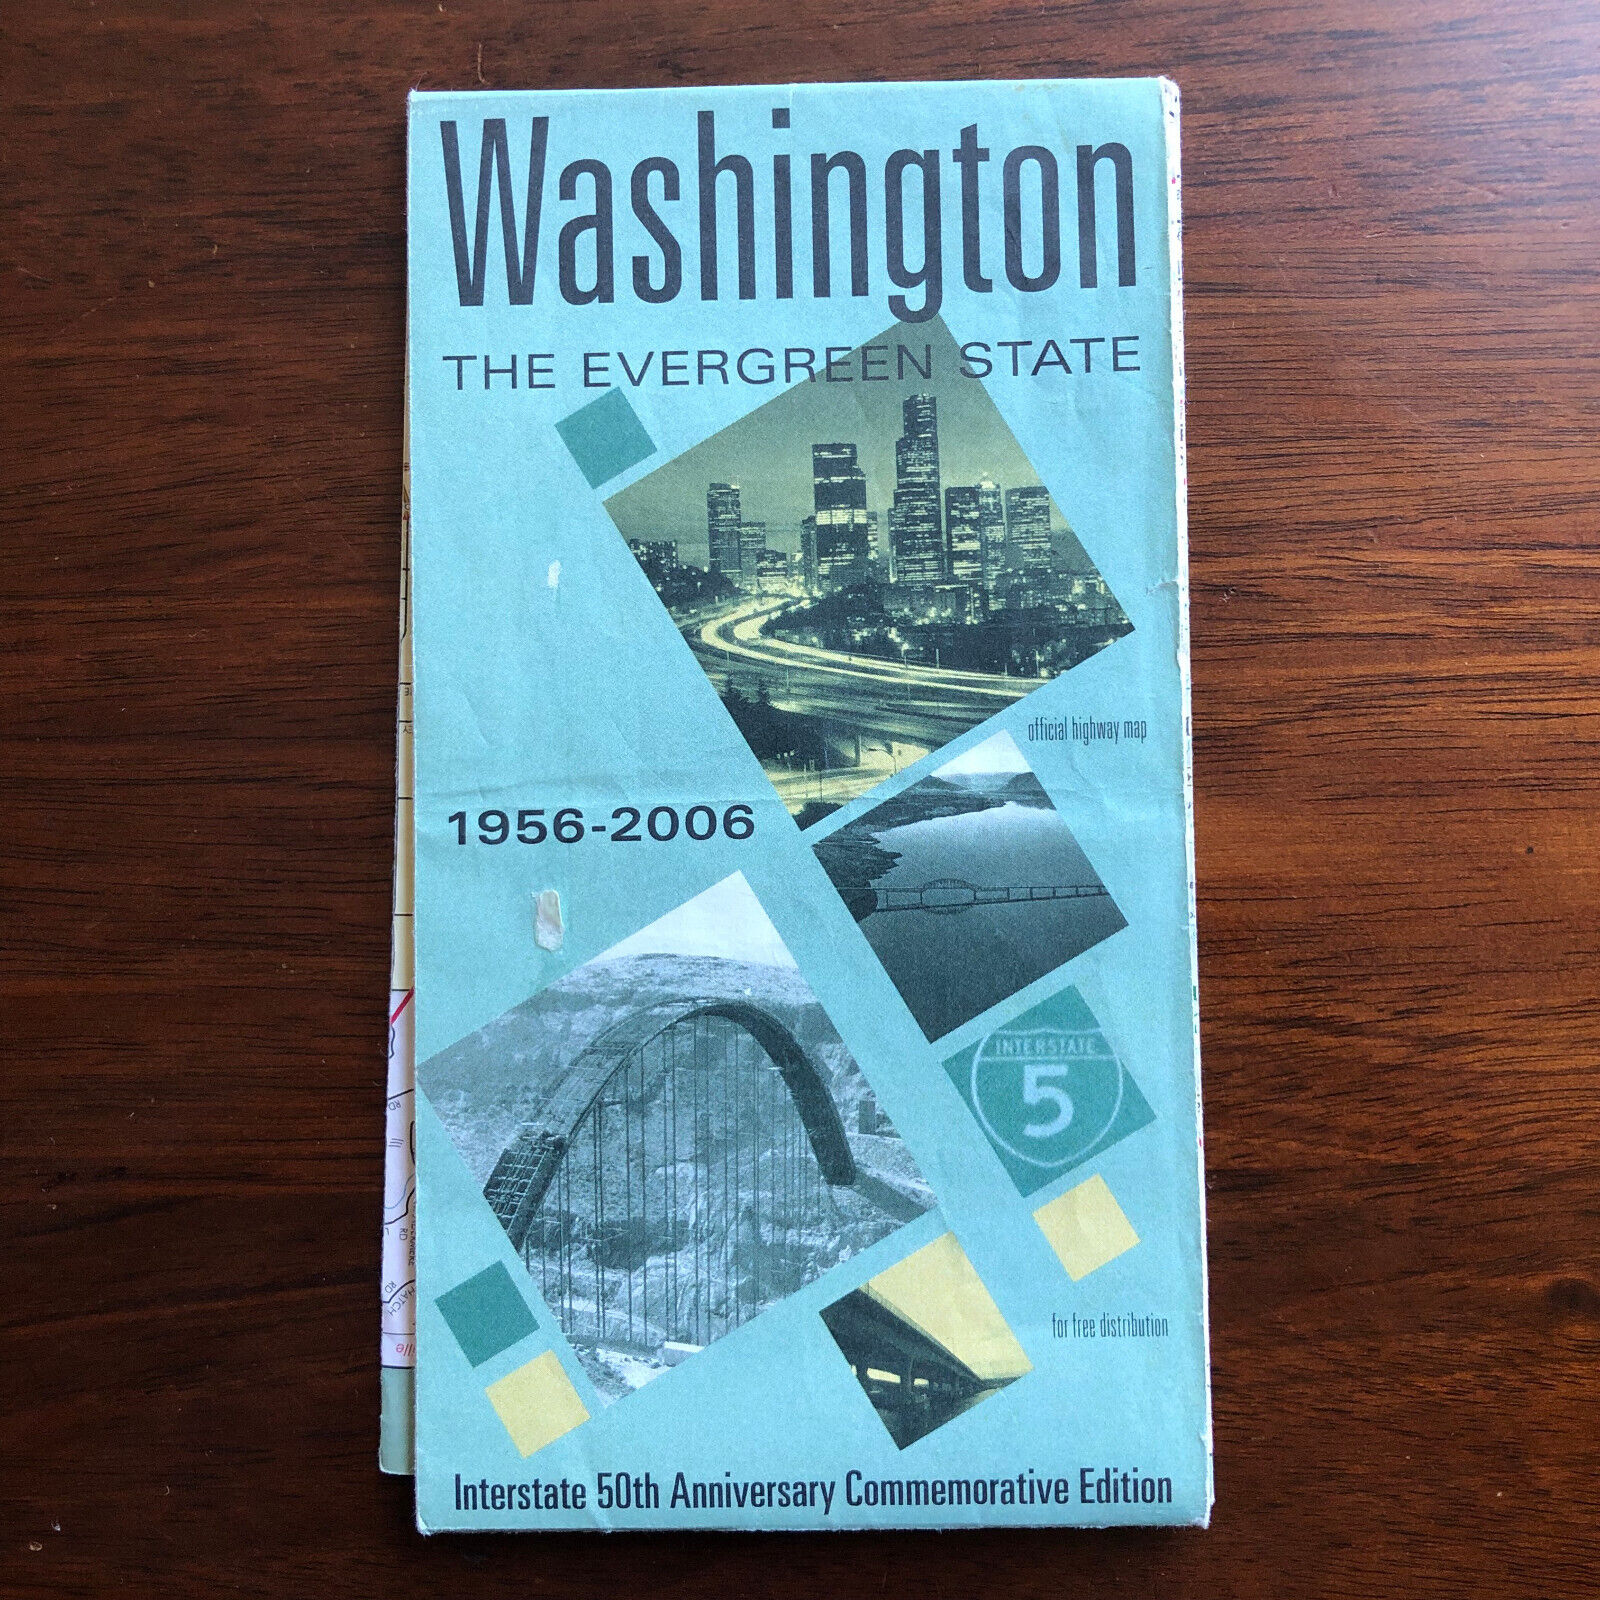 MAP 1956-2006 Washington Interstate highway roads 50th Anniversary Commemorative